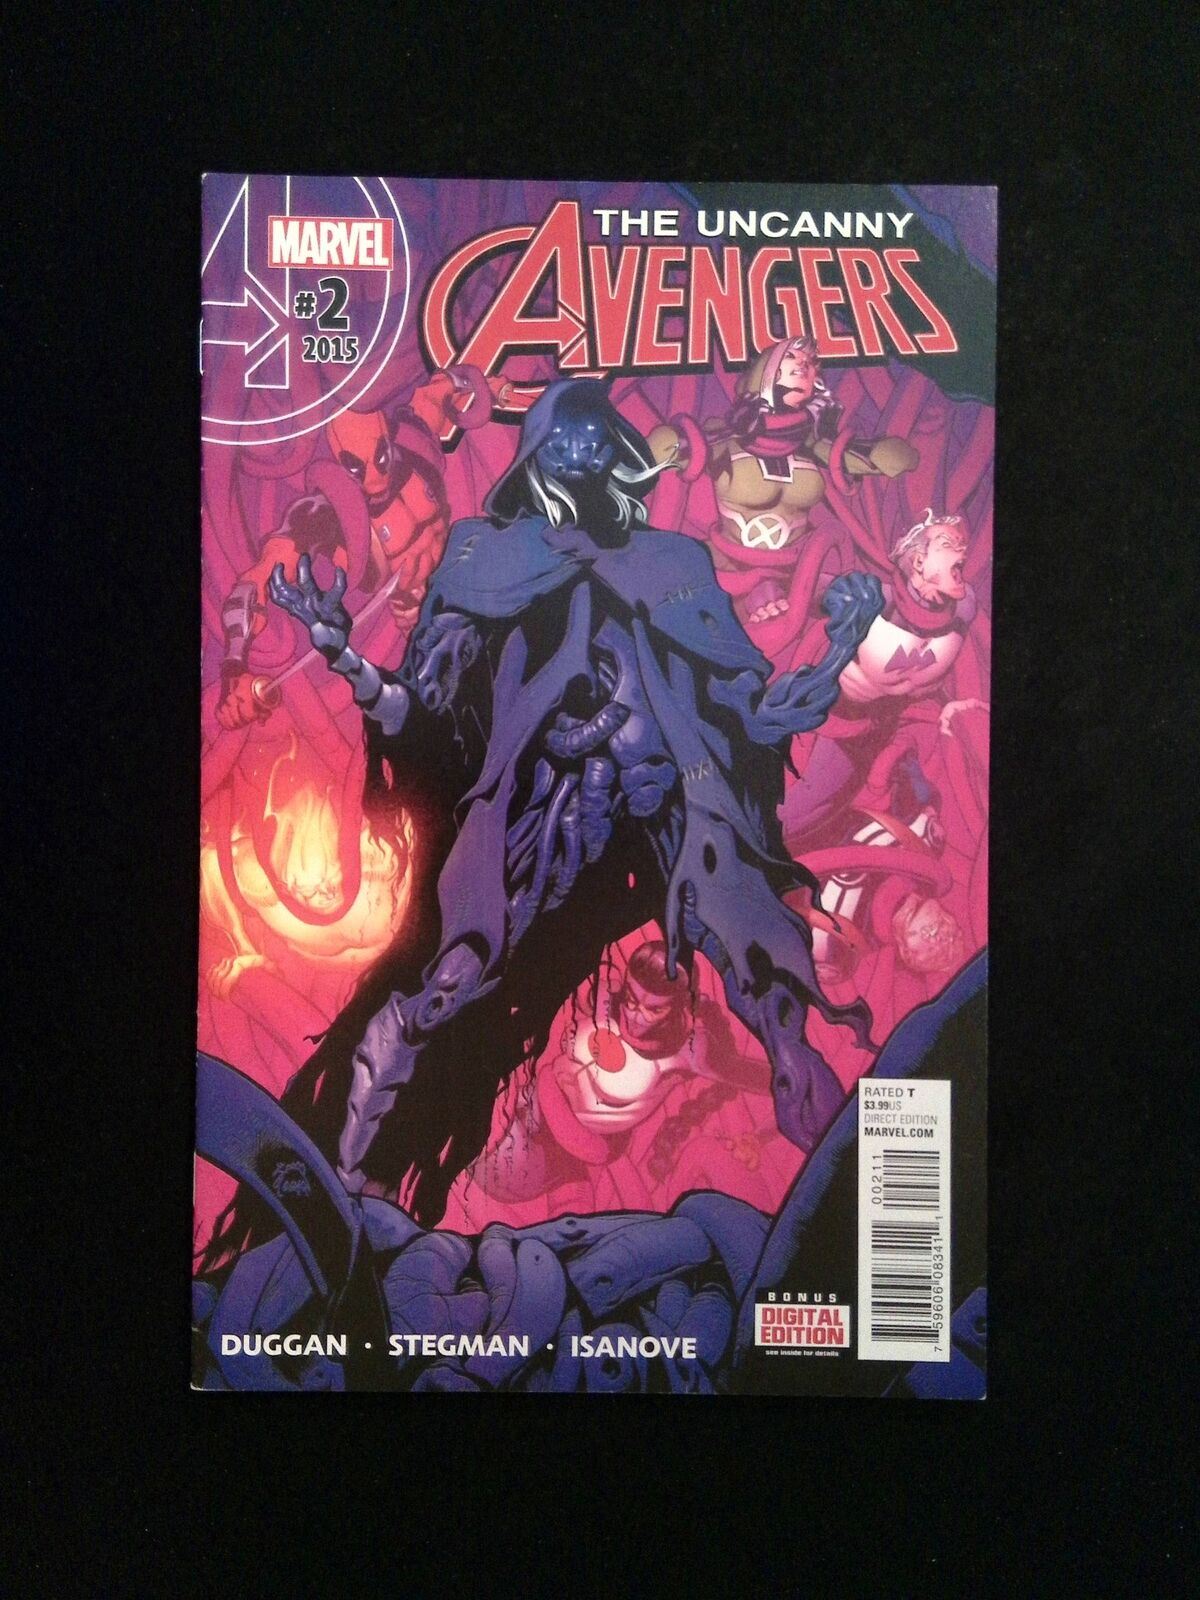 Uncanny Avengers #2 (3rd Series) Marvel Comics 2015 VF+